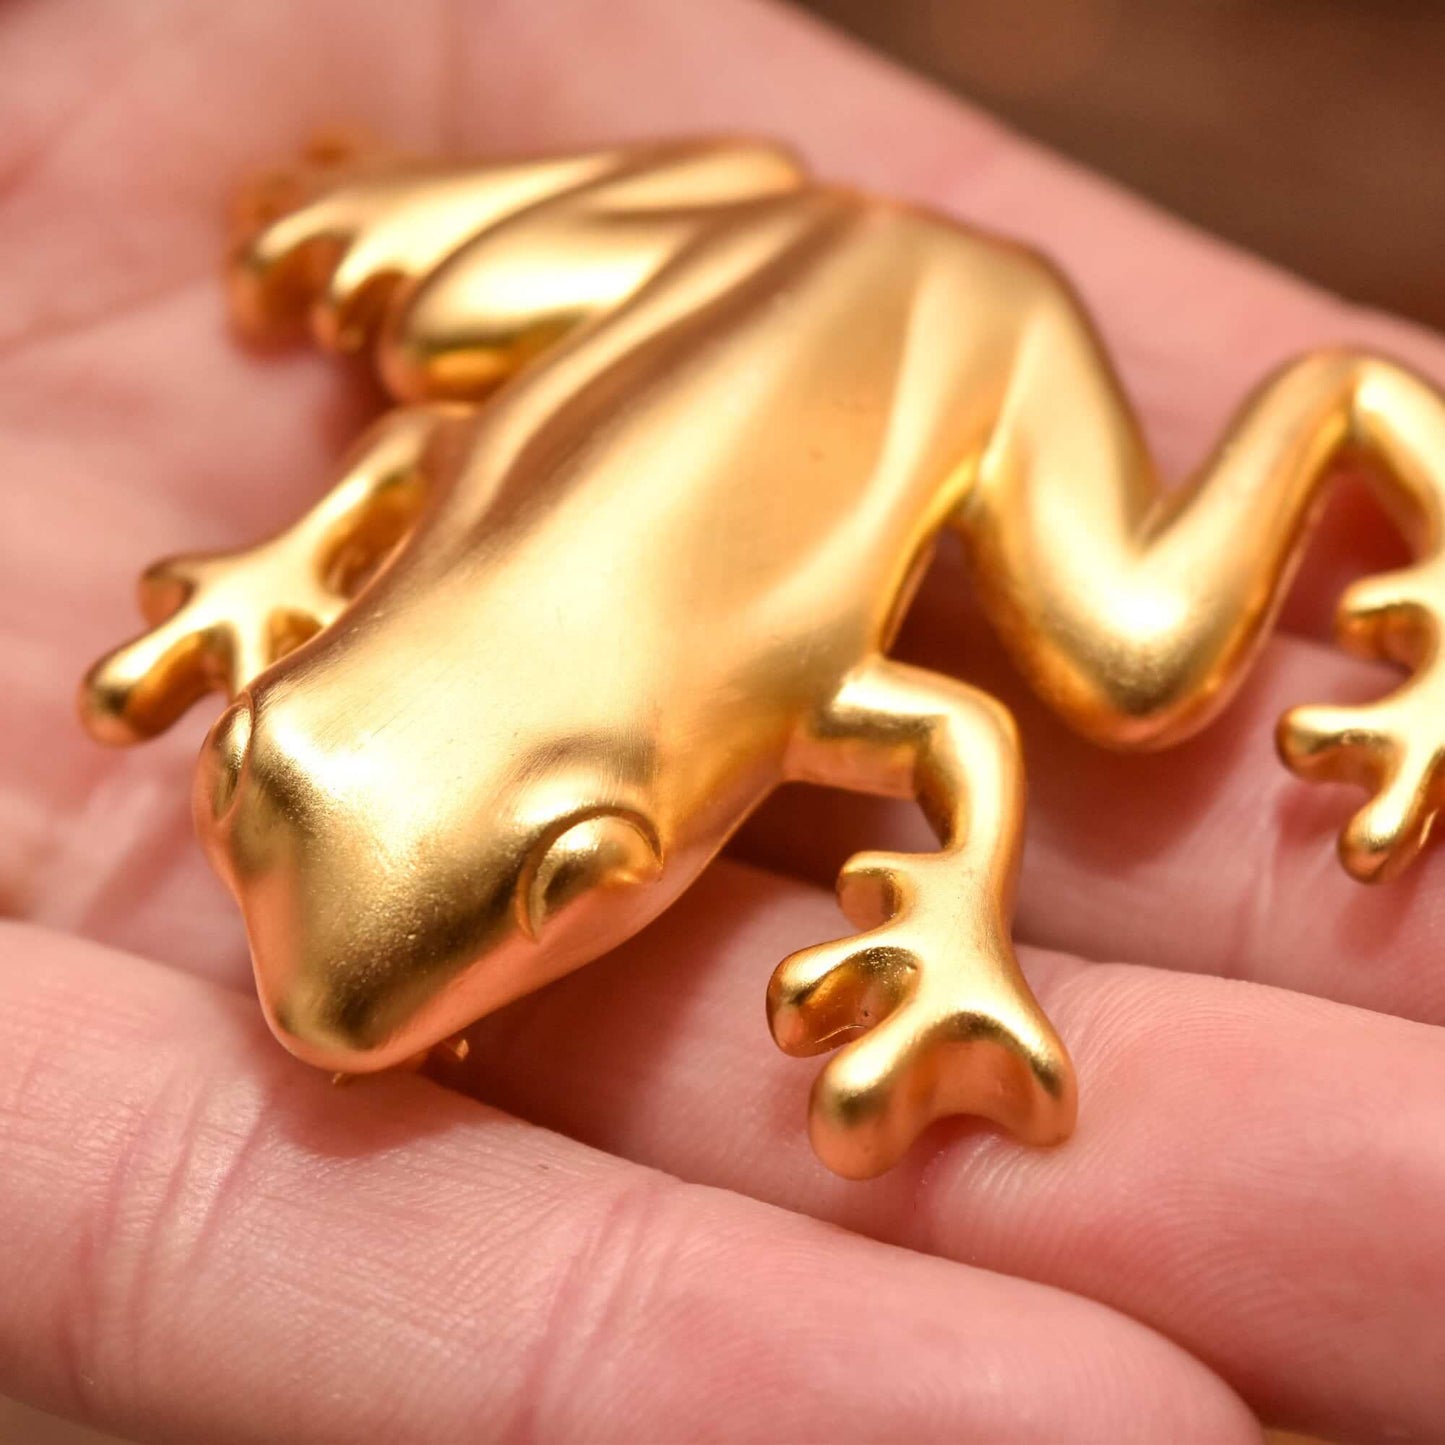 Givenchy Paris Golden Tree Frog Brooch, Satin Gold Plated, Vintage Designer Jewelry, 2.5"